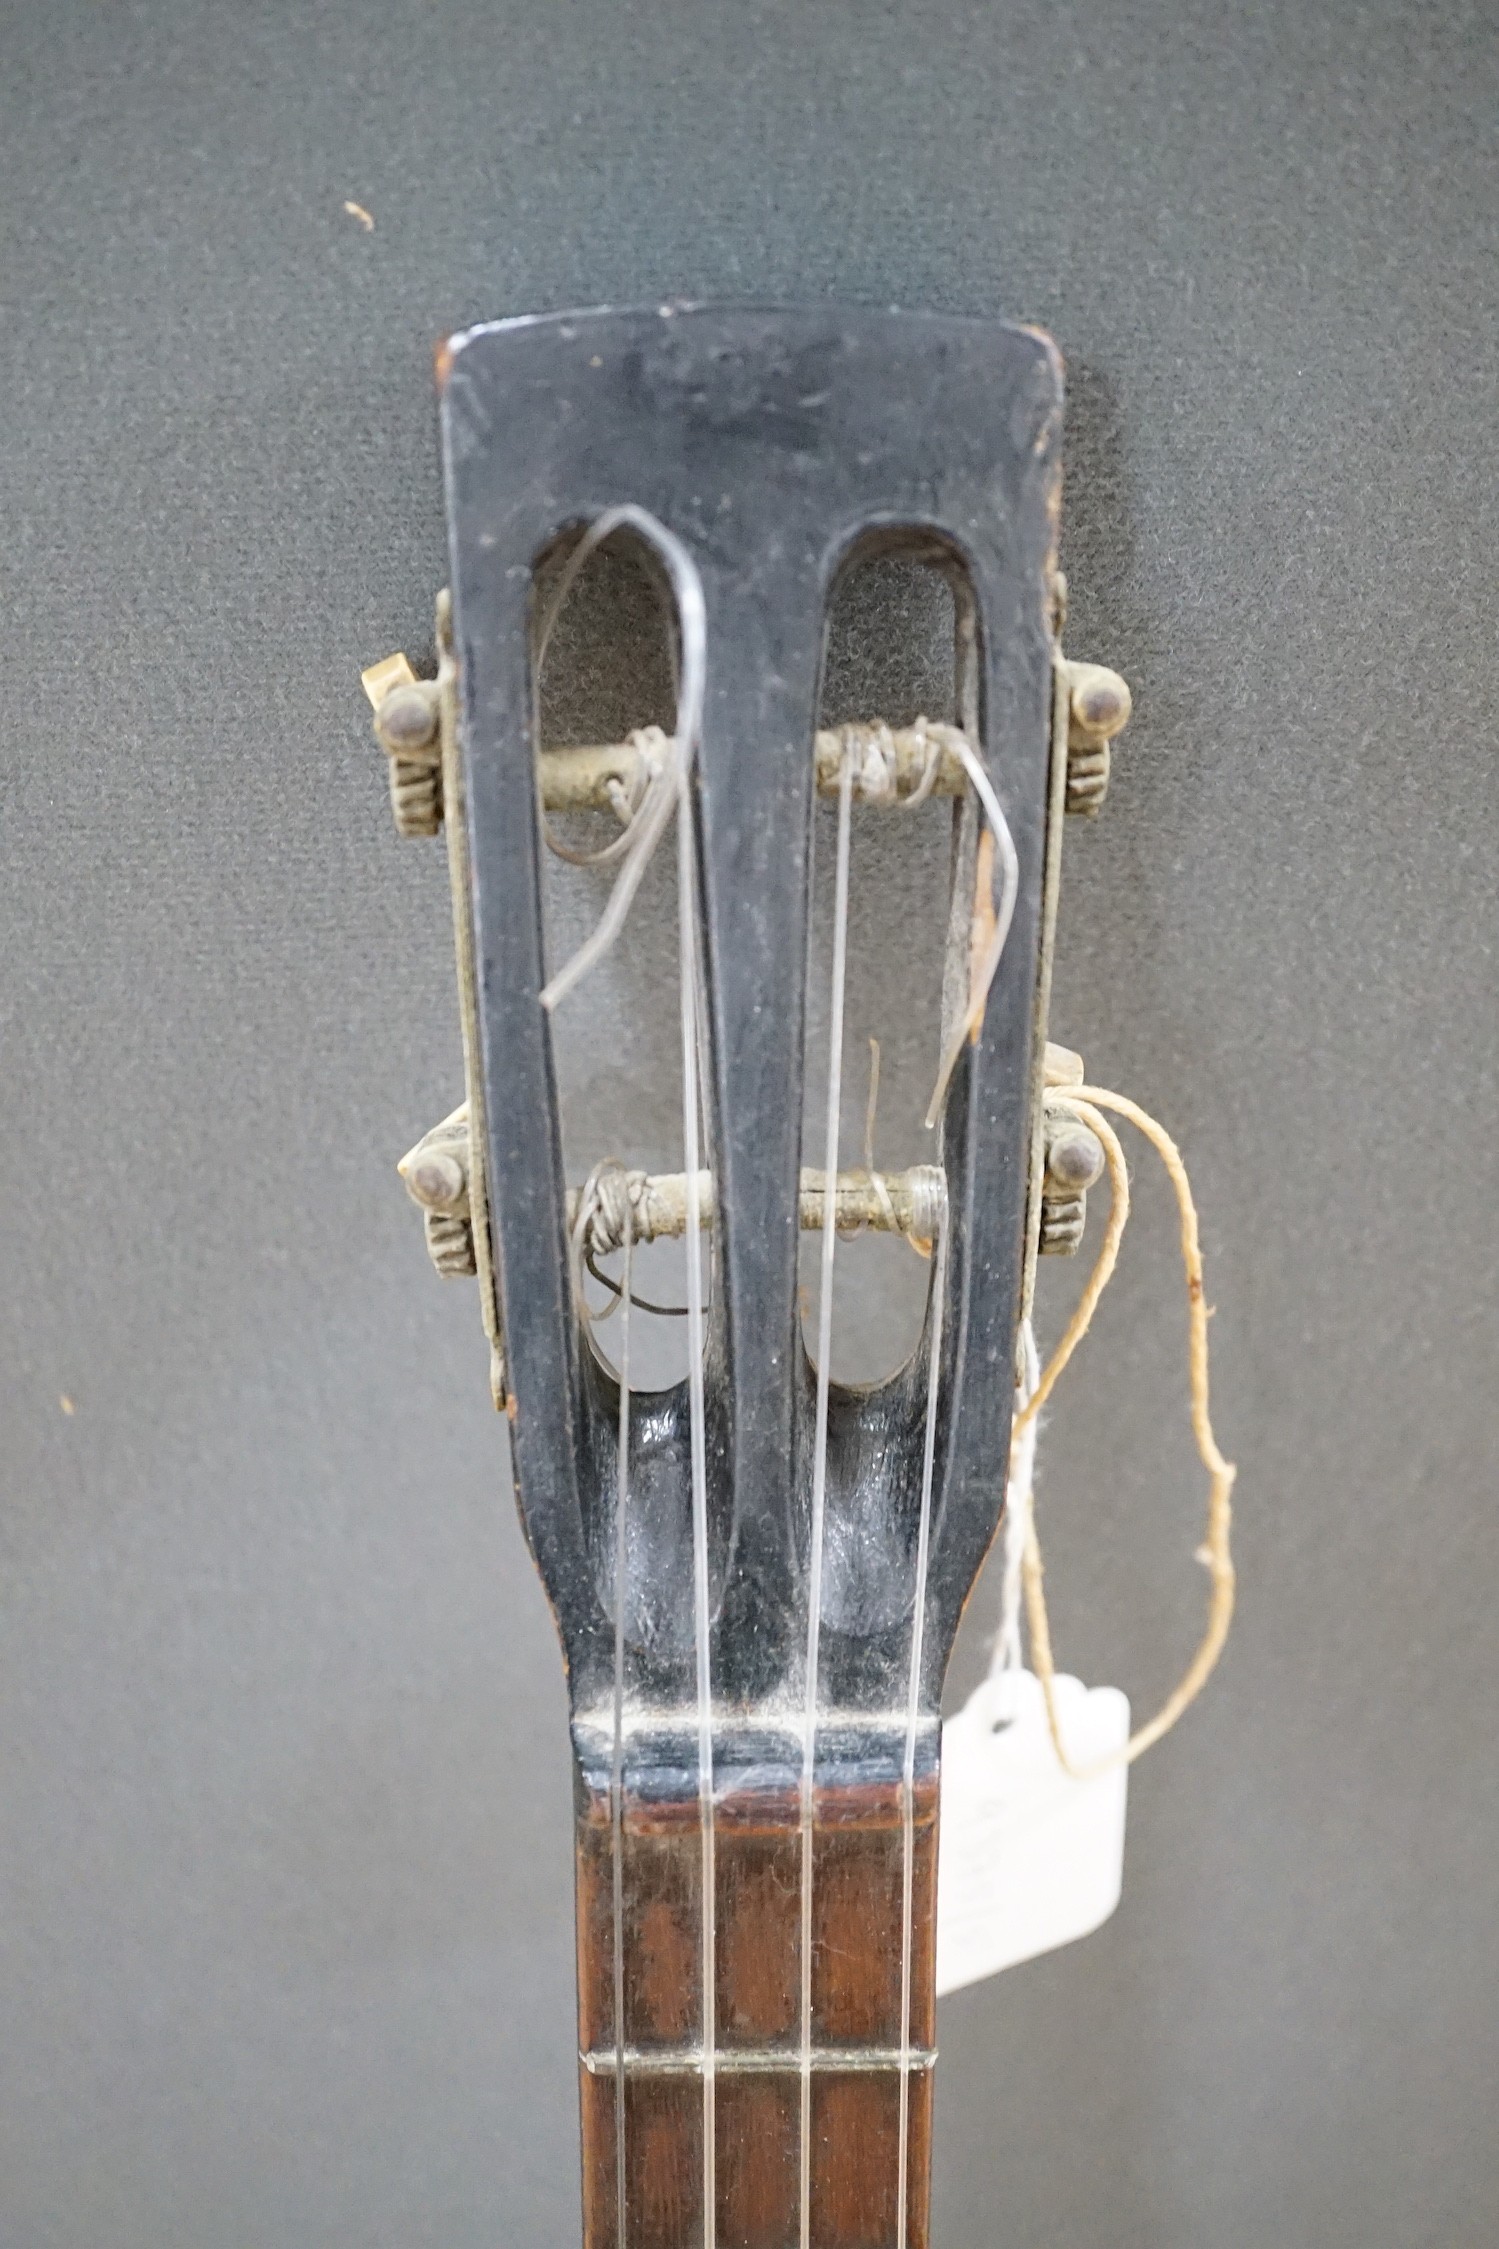 A four string banjo style parlour guitar